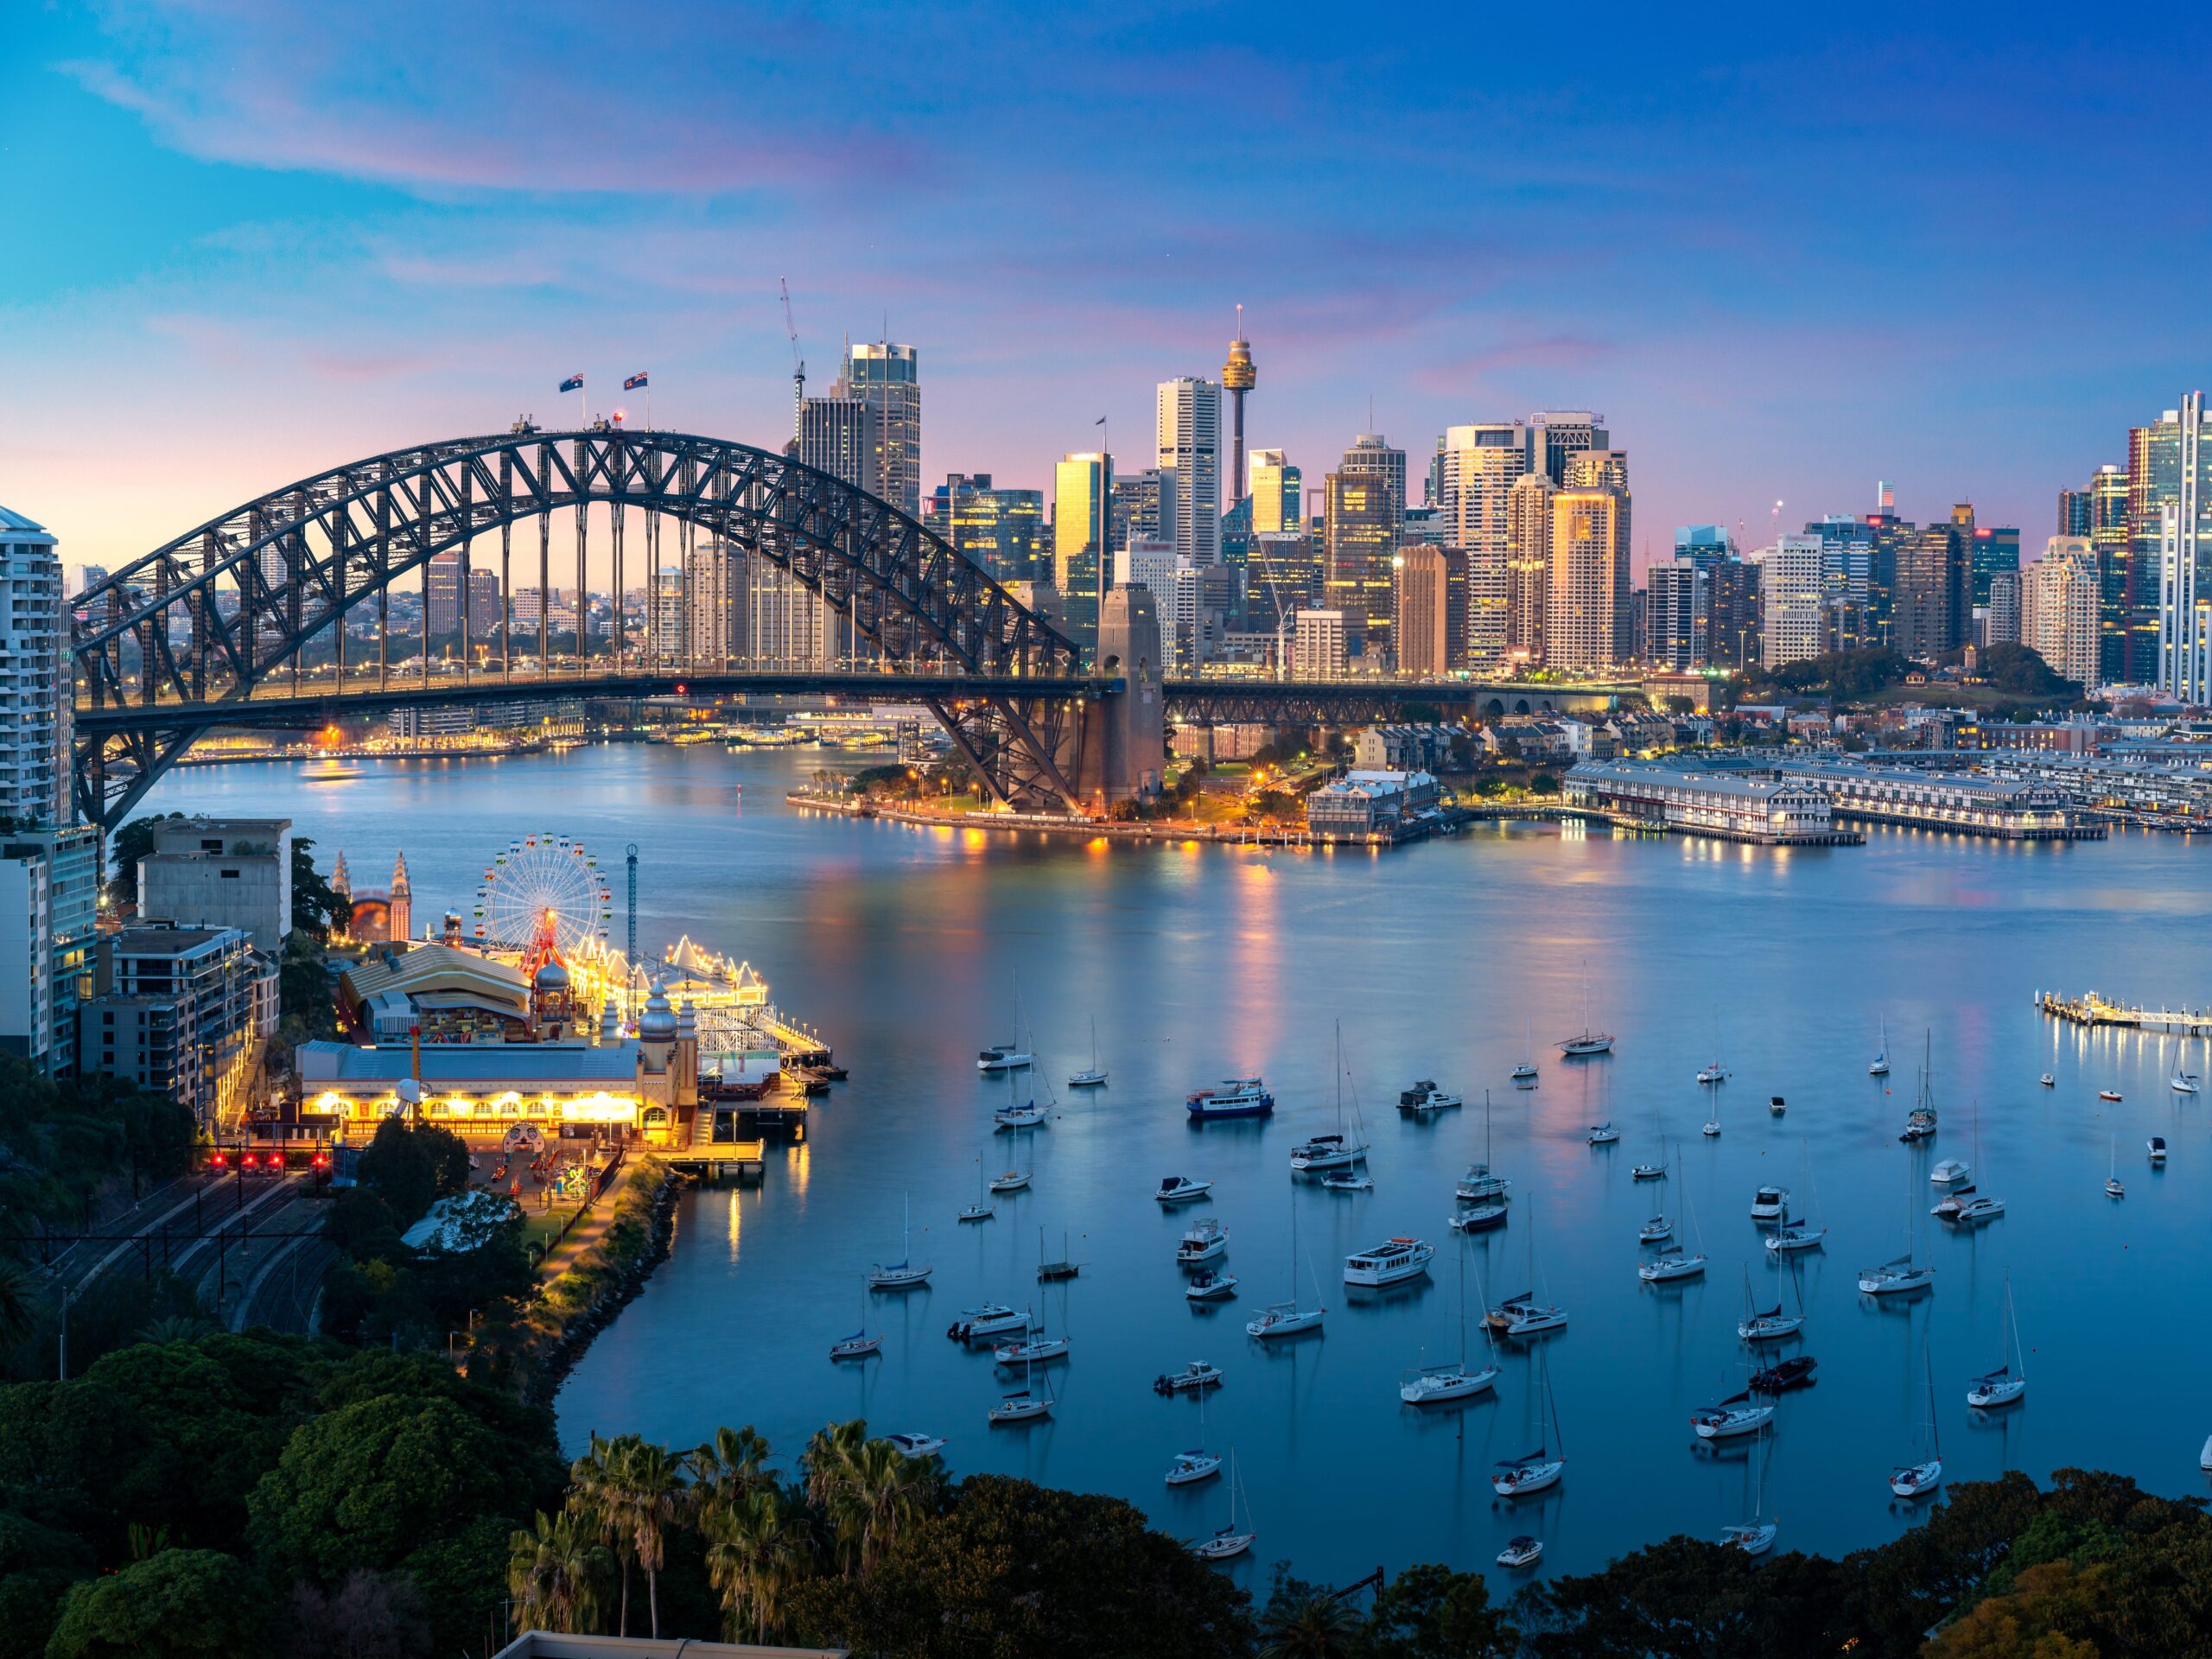 f Sydney, Australia with Harbor Bridge and Sydney skyline during sunset.